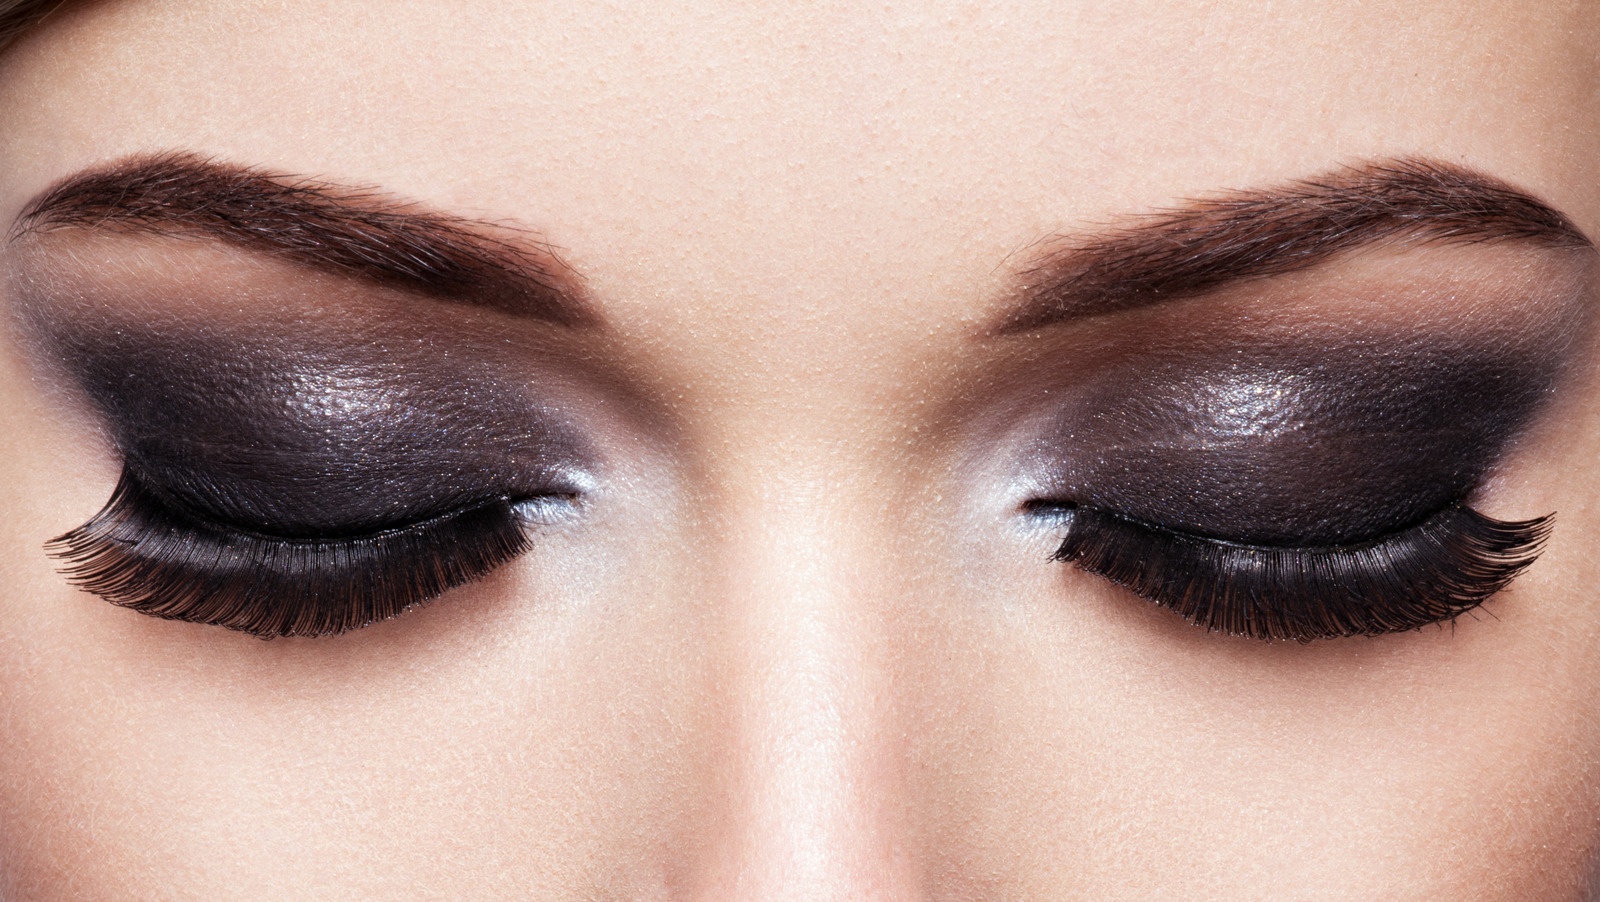 Eye make-up look challenge – black glitter